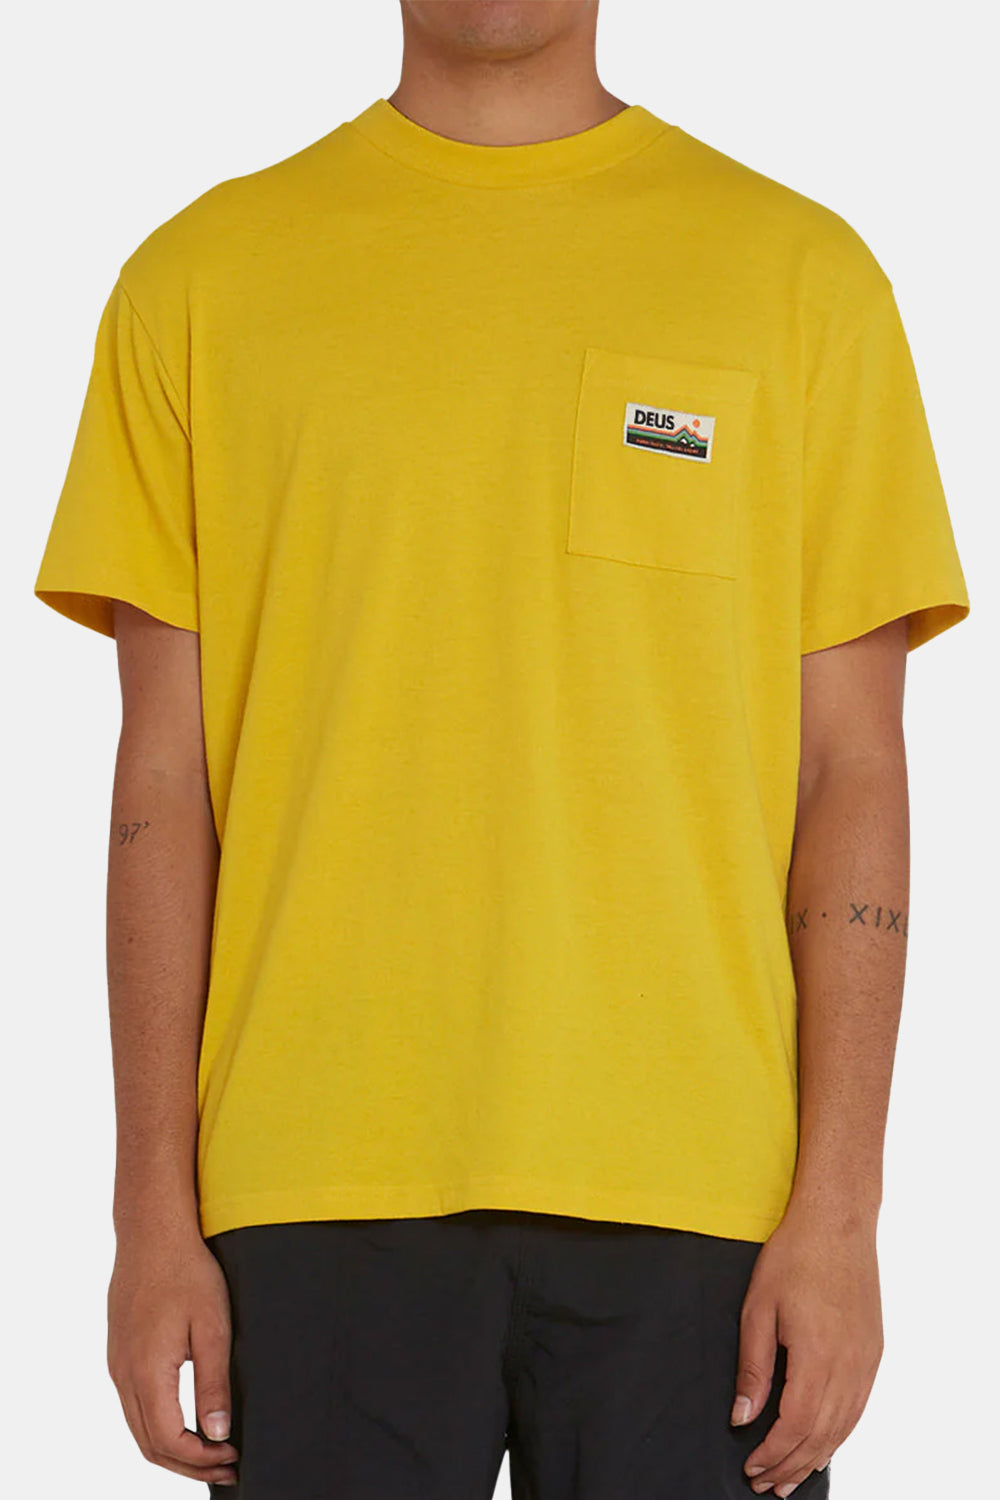 Deus Tango Pocket T-Shirt (Super Lemon)